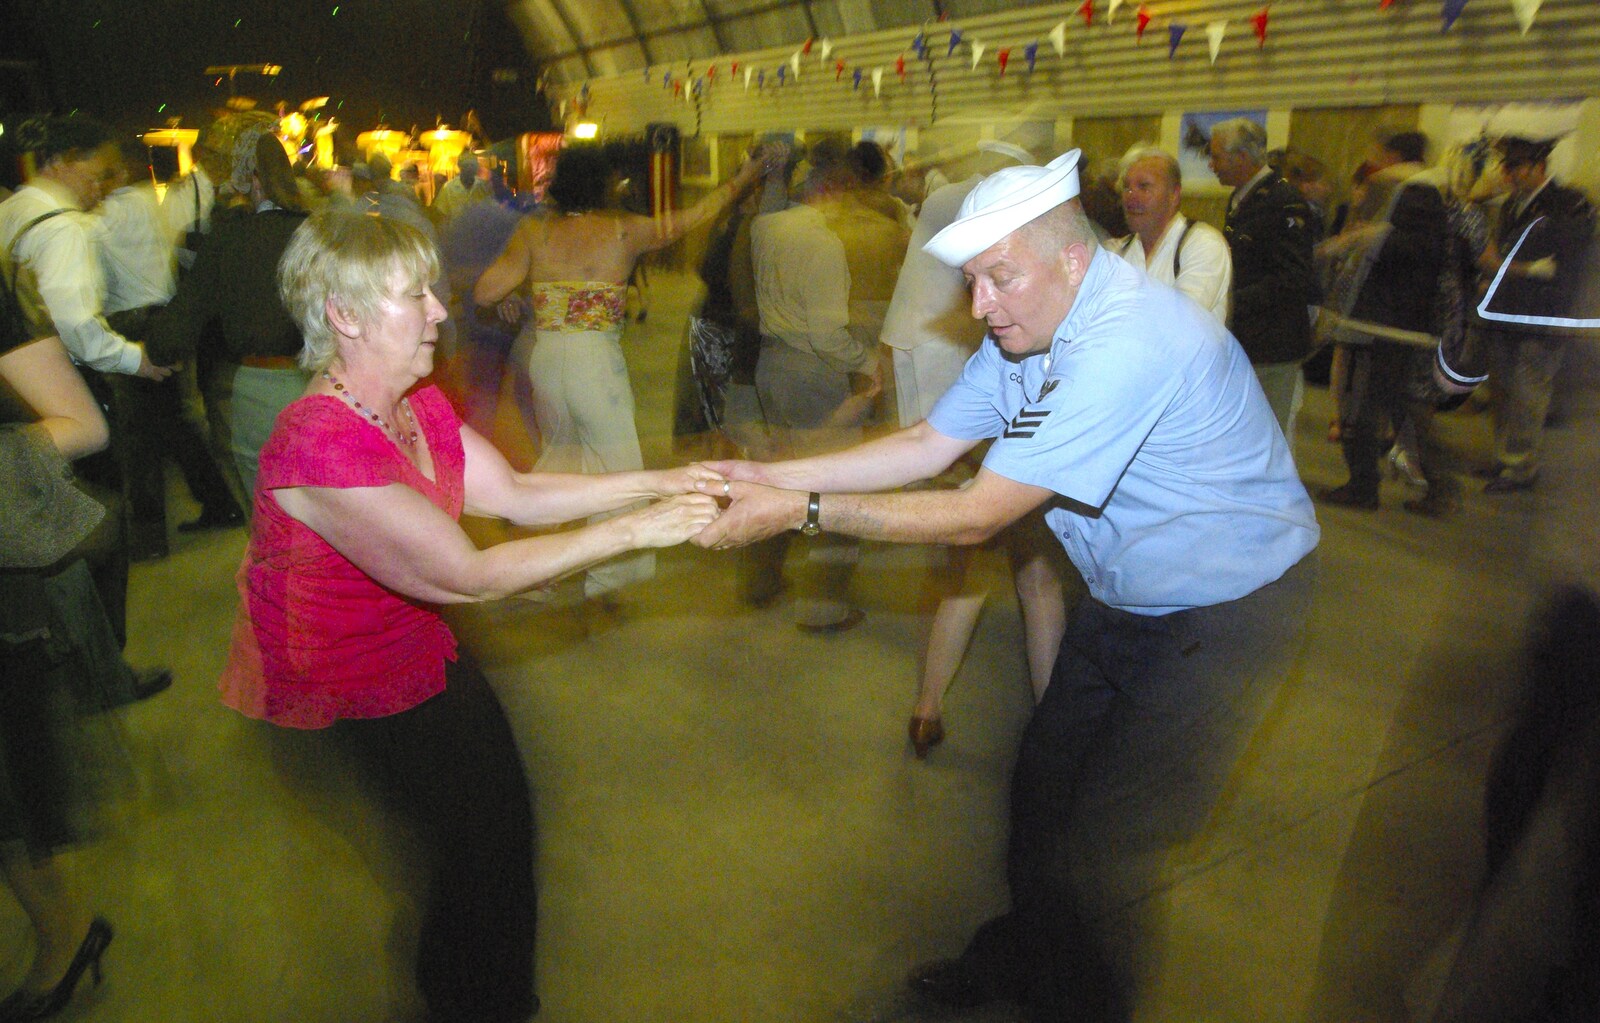 Some sailor jiving from The Debach Airfield 1940s Dance, Debach, Suffolk - 6th June 2009